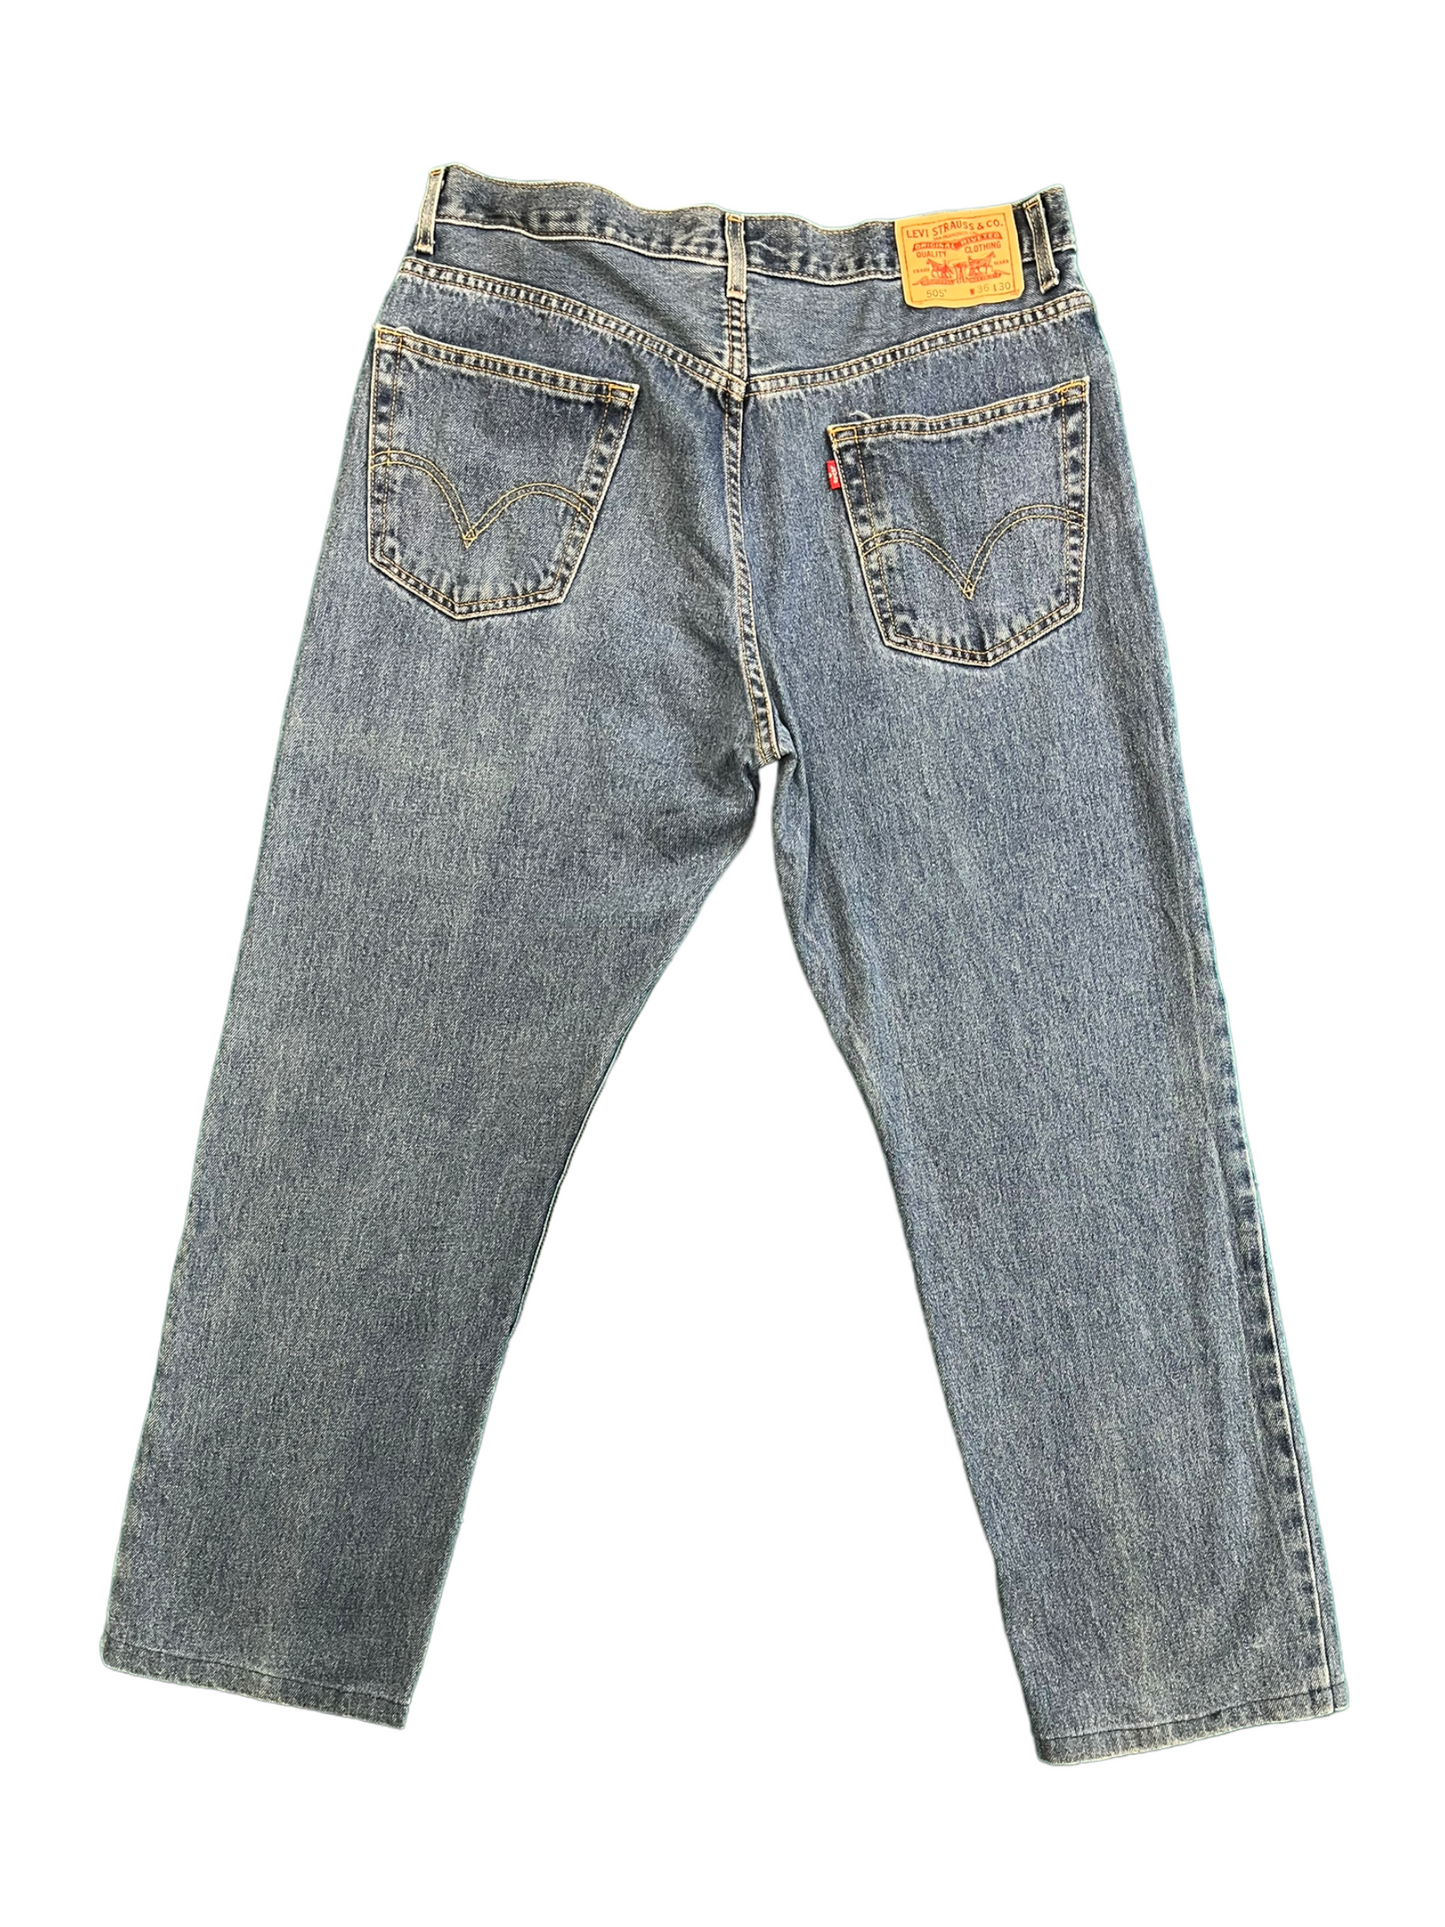 Mens Darkwash Levis Jeans - Waist 36" Length 30"